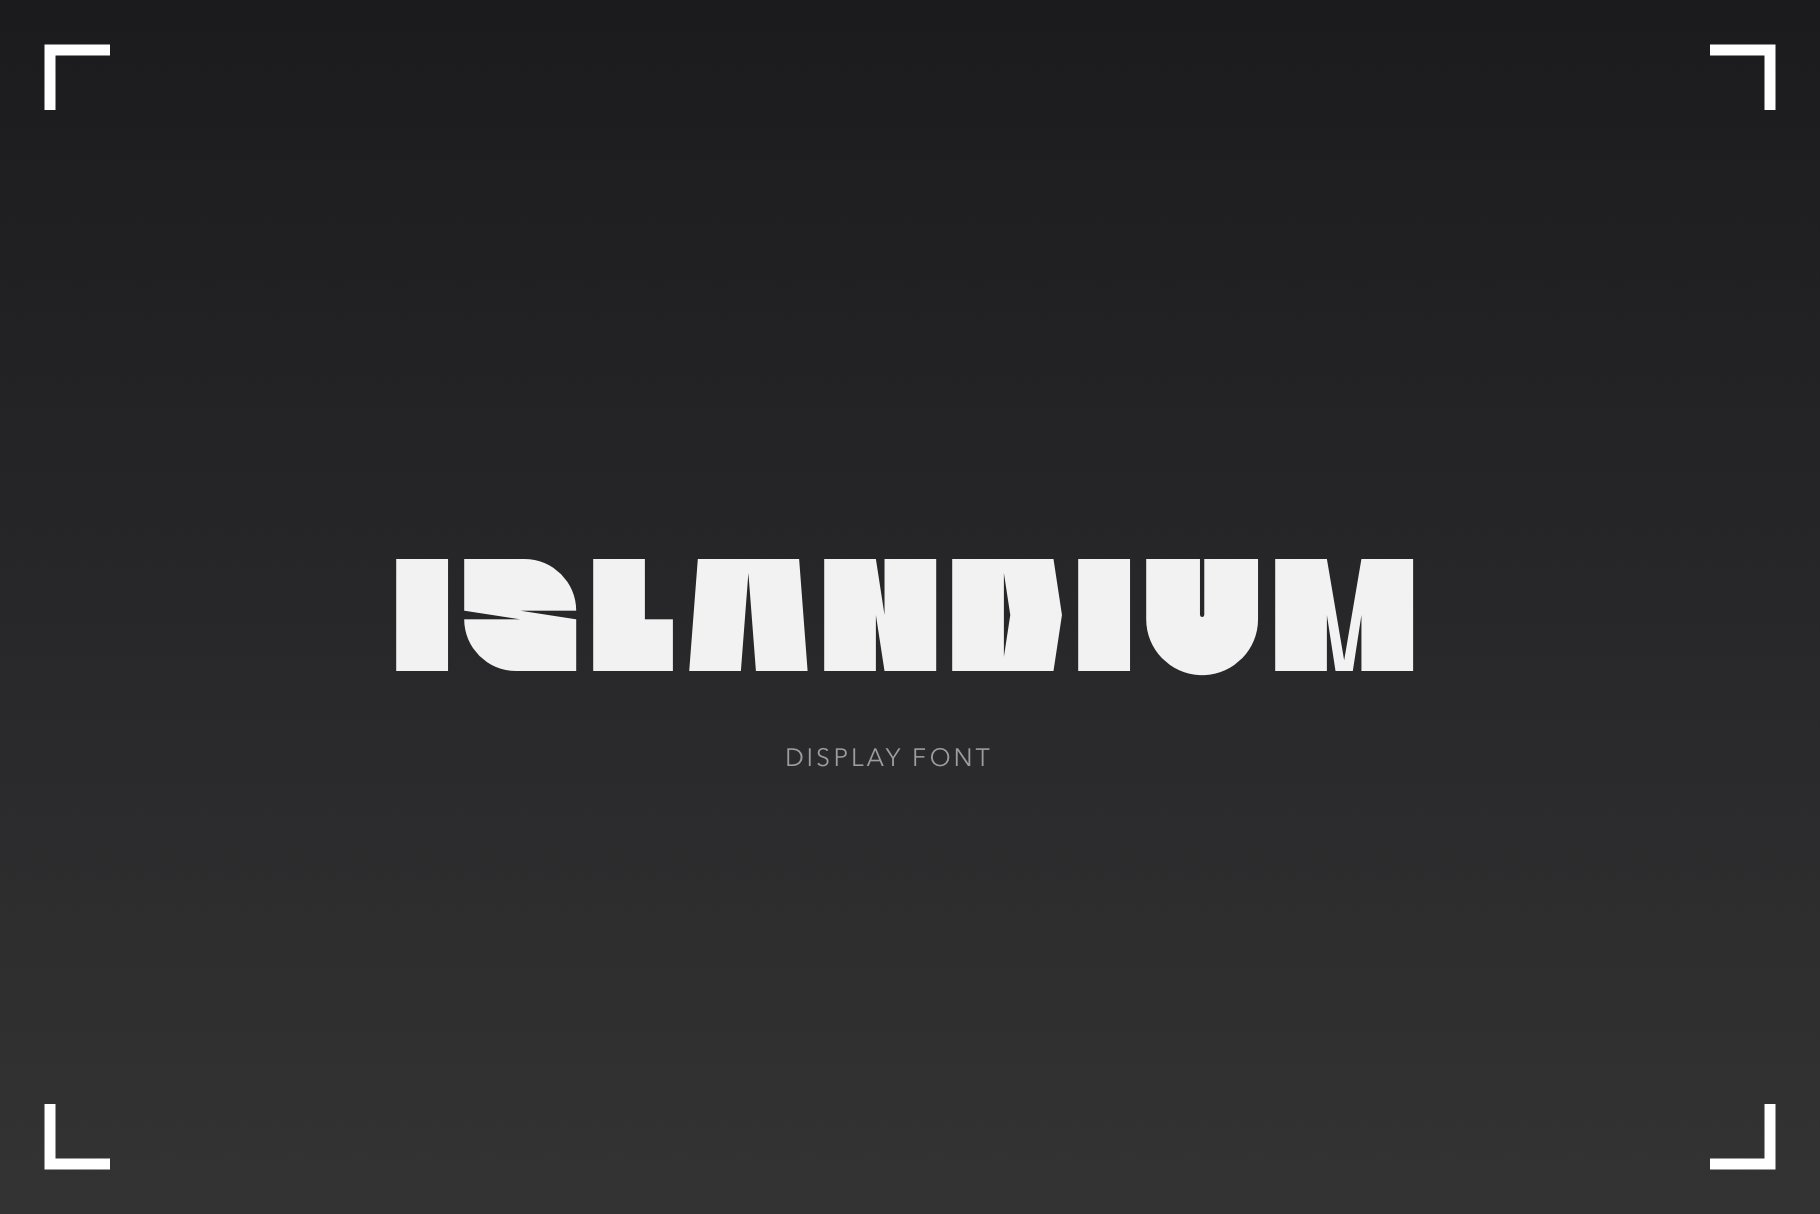 ISLANDIUM - Modern Sans Serif Font cover image.